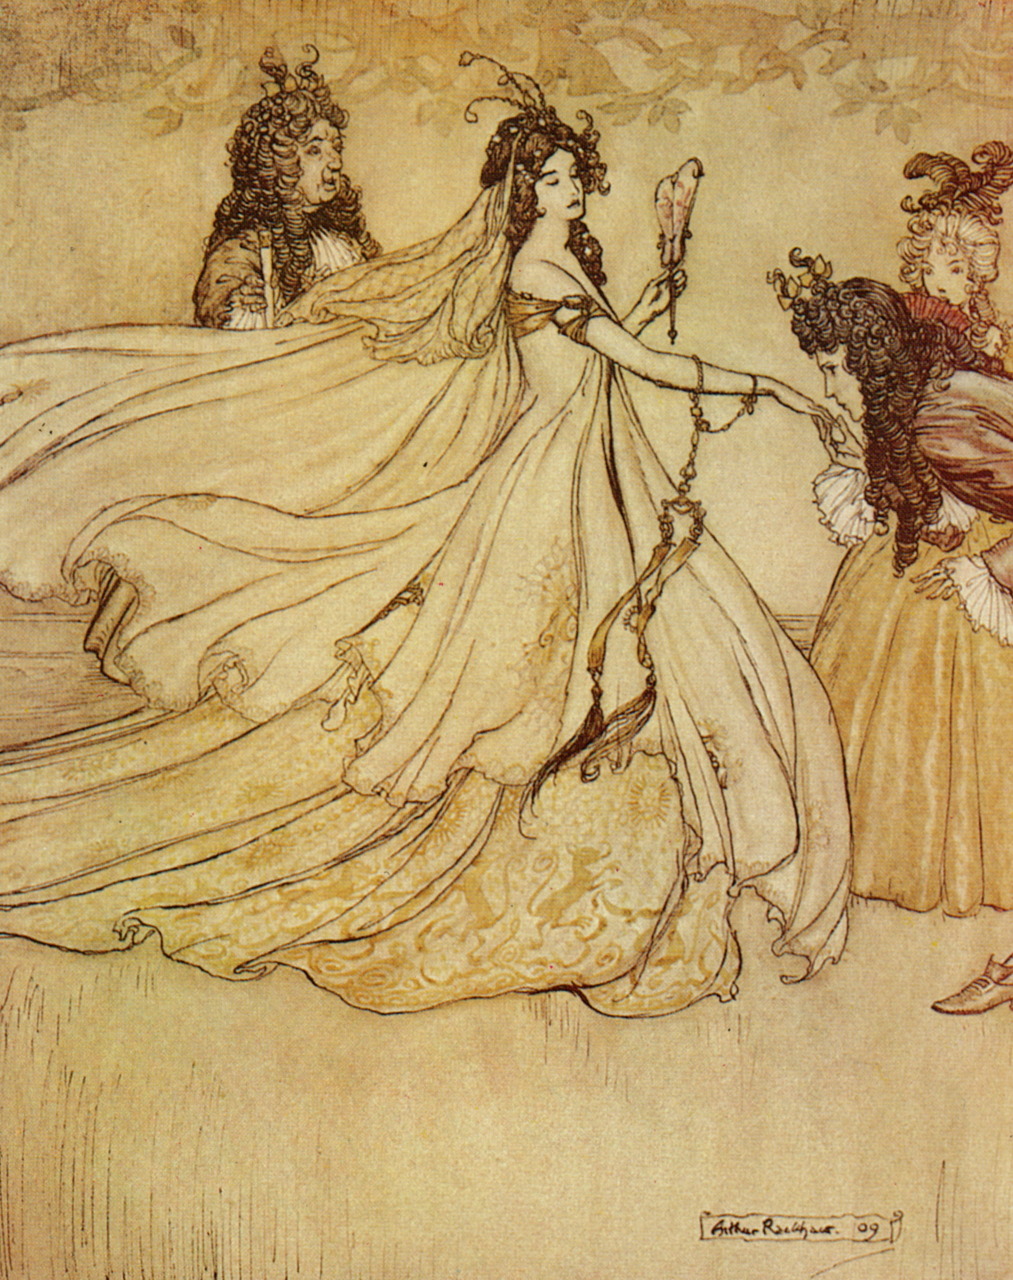 Cinderella goes to the ball: Rackham illustration